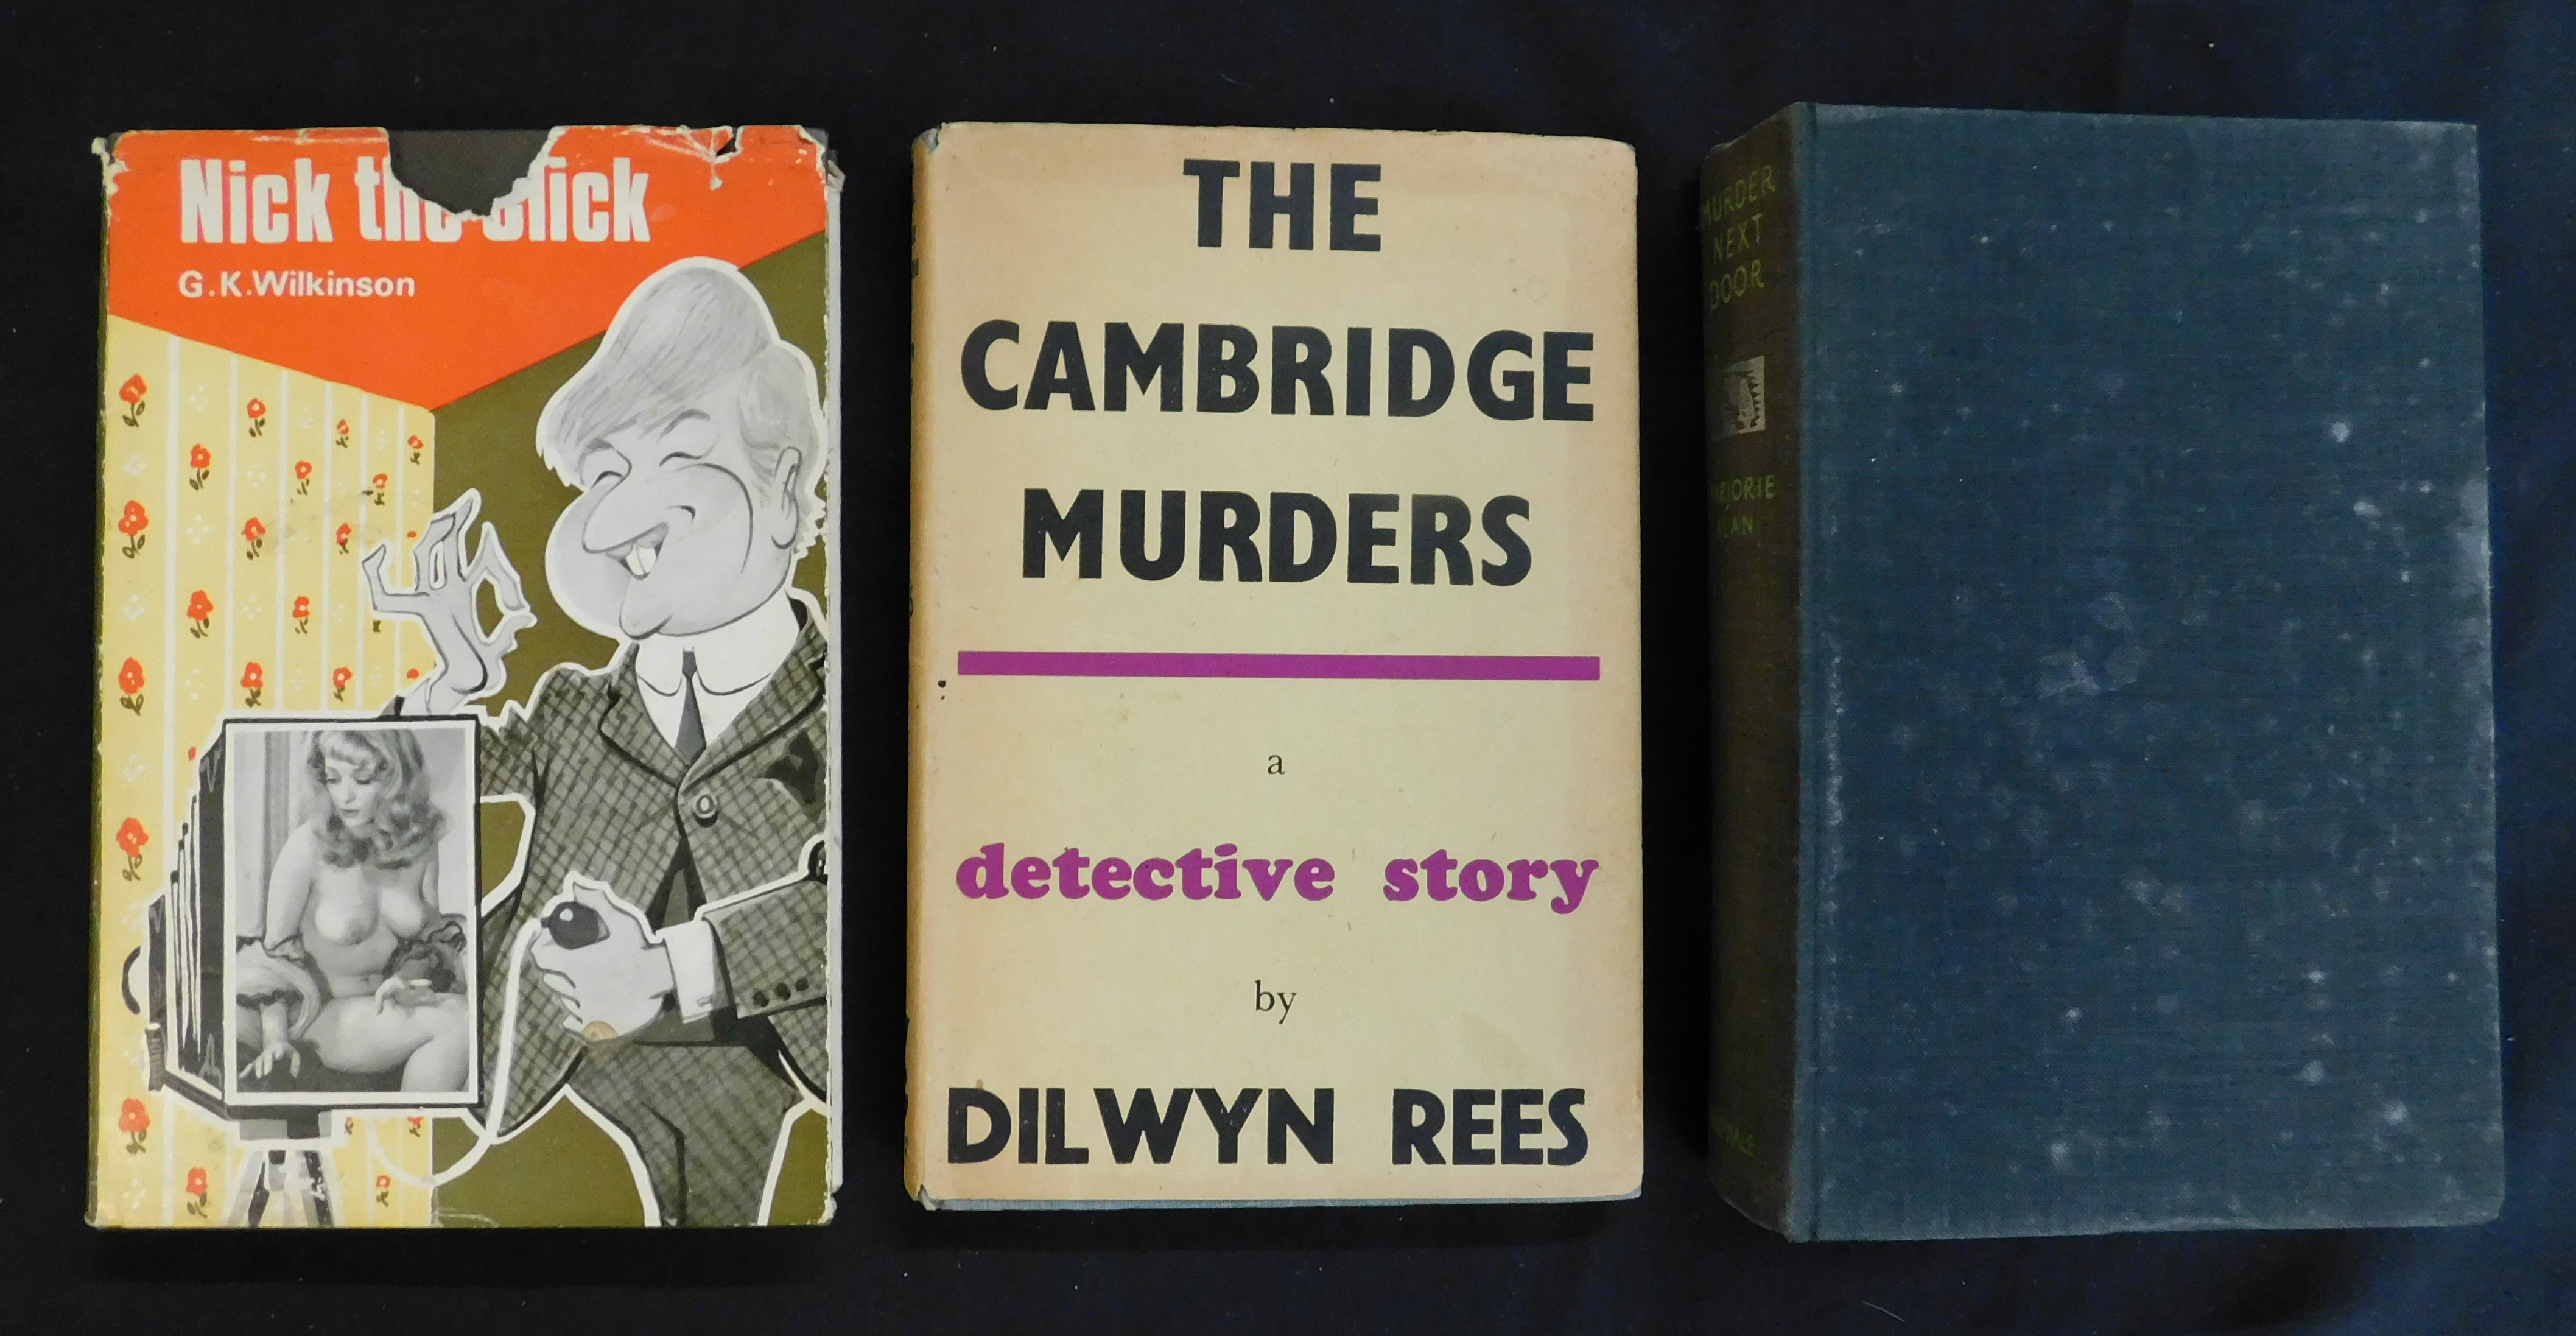 GLYN E DANIEL "DILWYN REES": THE CAMBRIDGE MURDERS, London, Victor Gollancz, 1945, 1st edition,